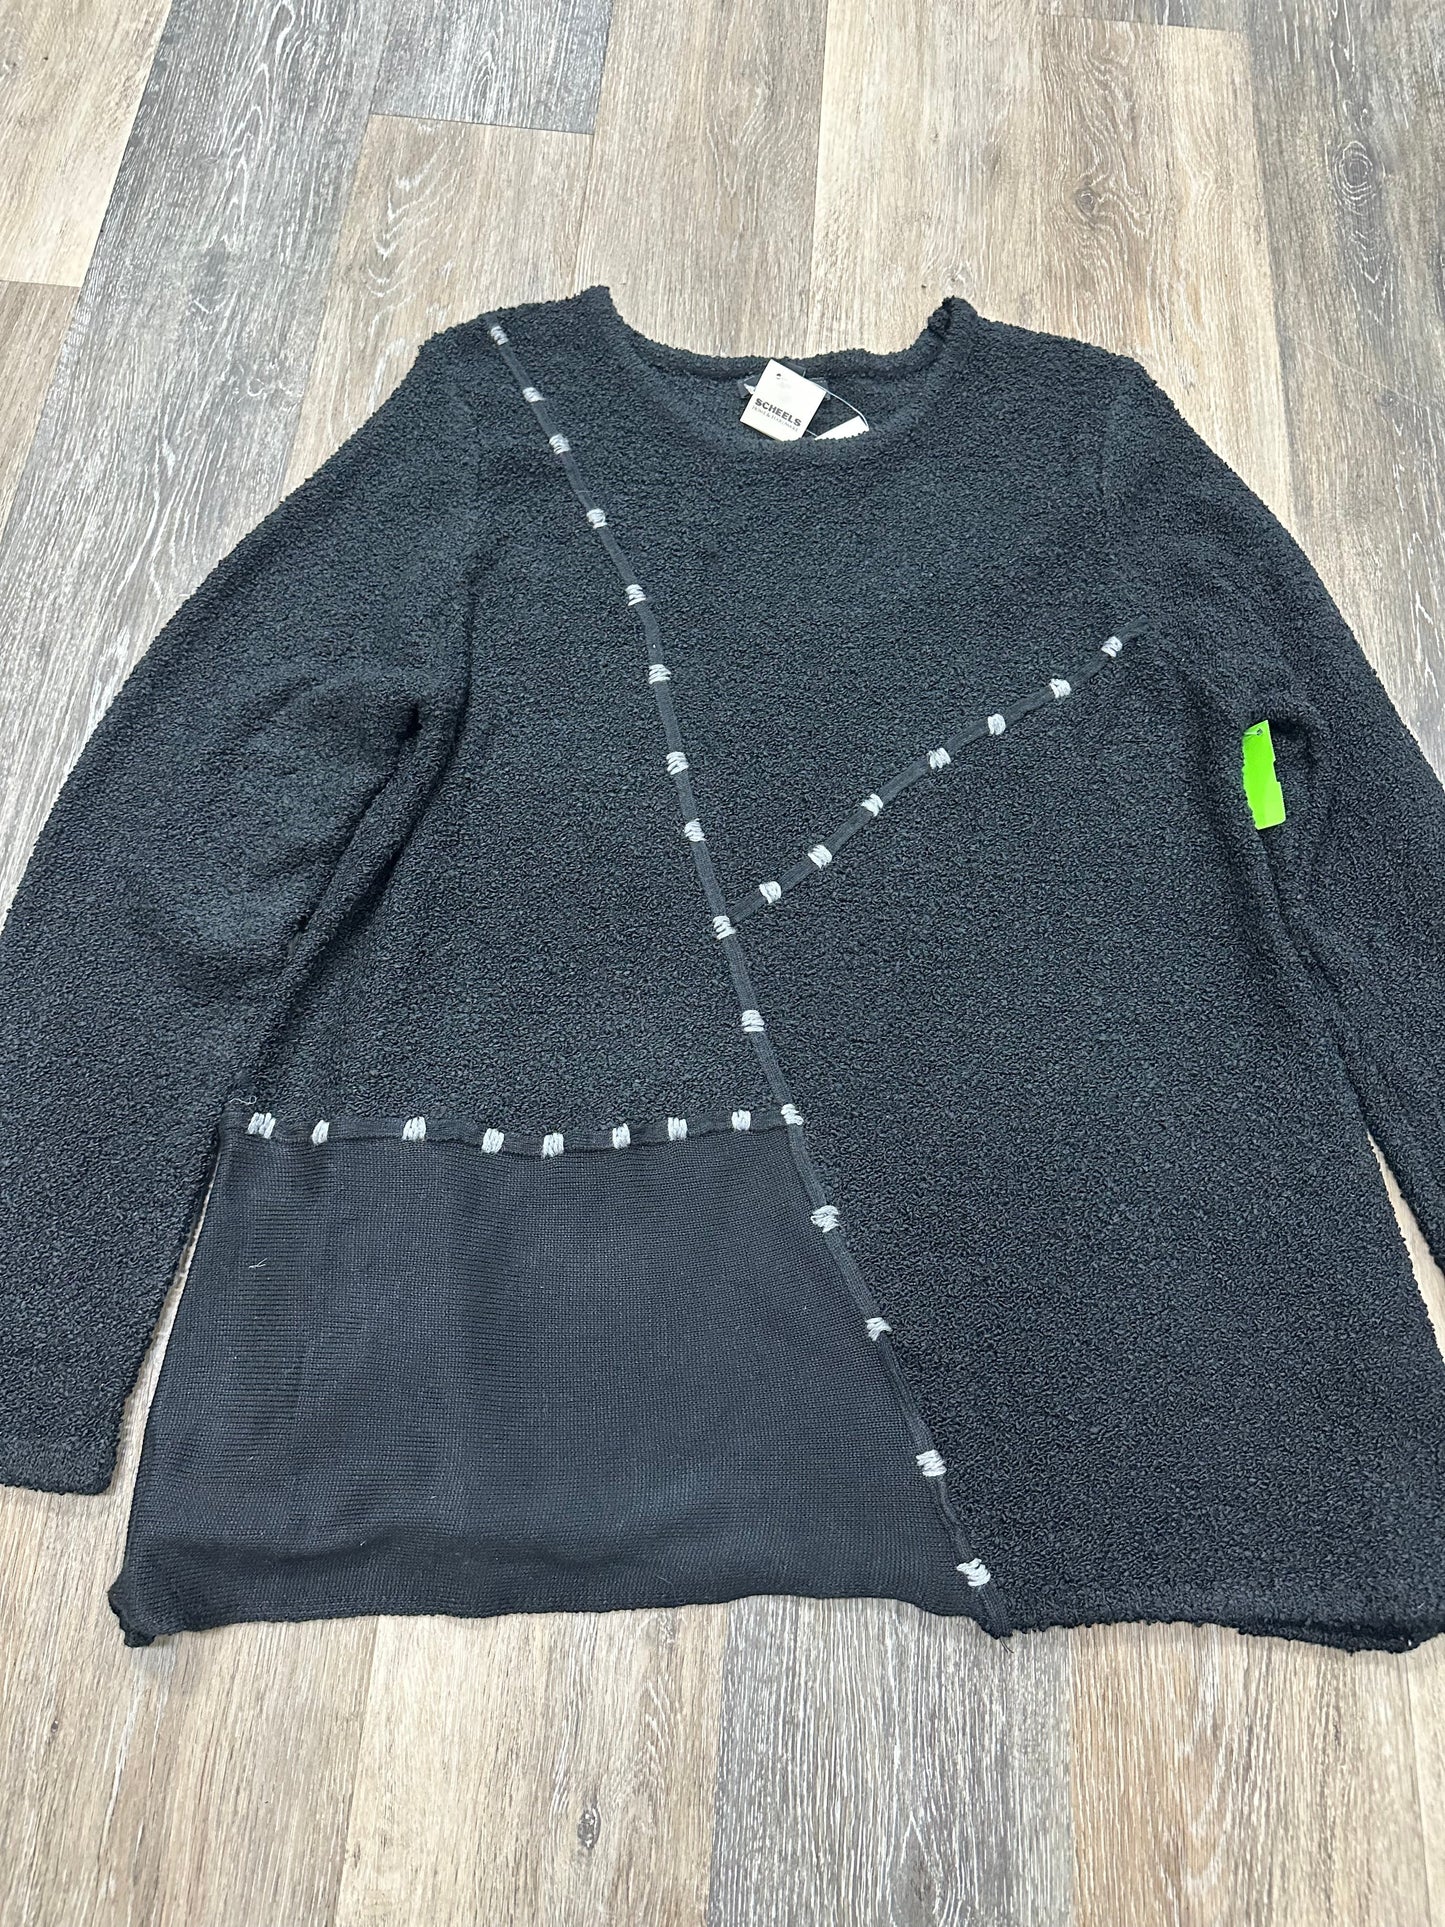 Sweater By Kaktus  Size: Xl